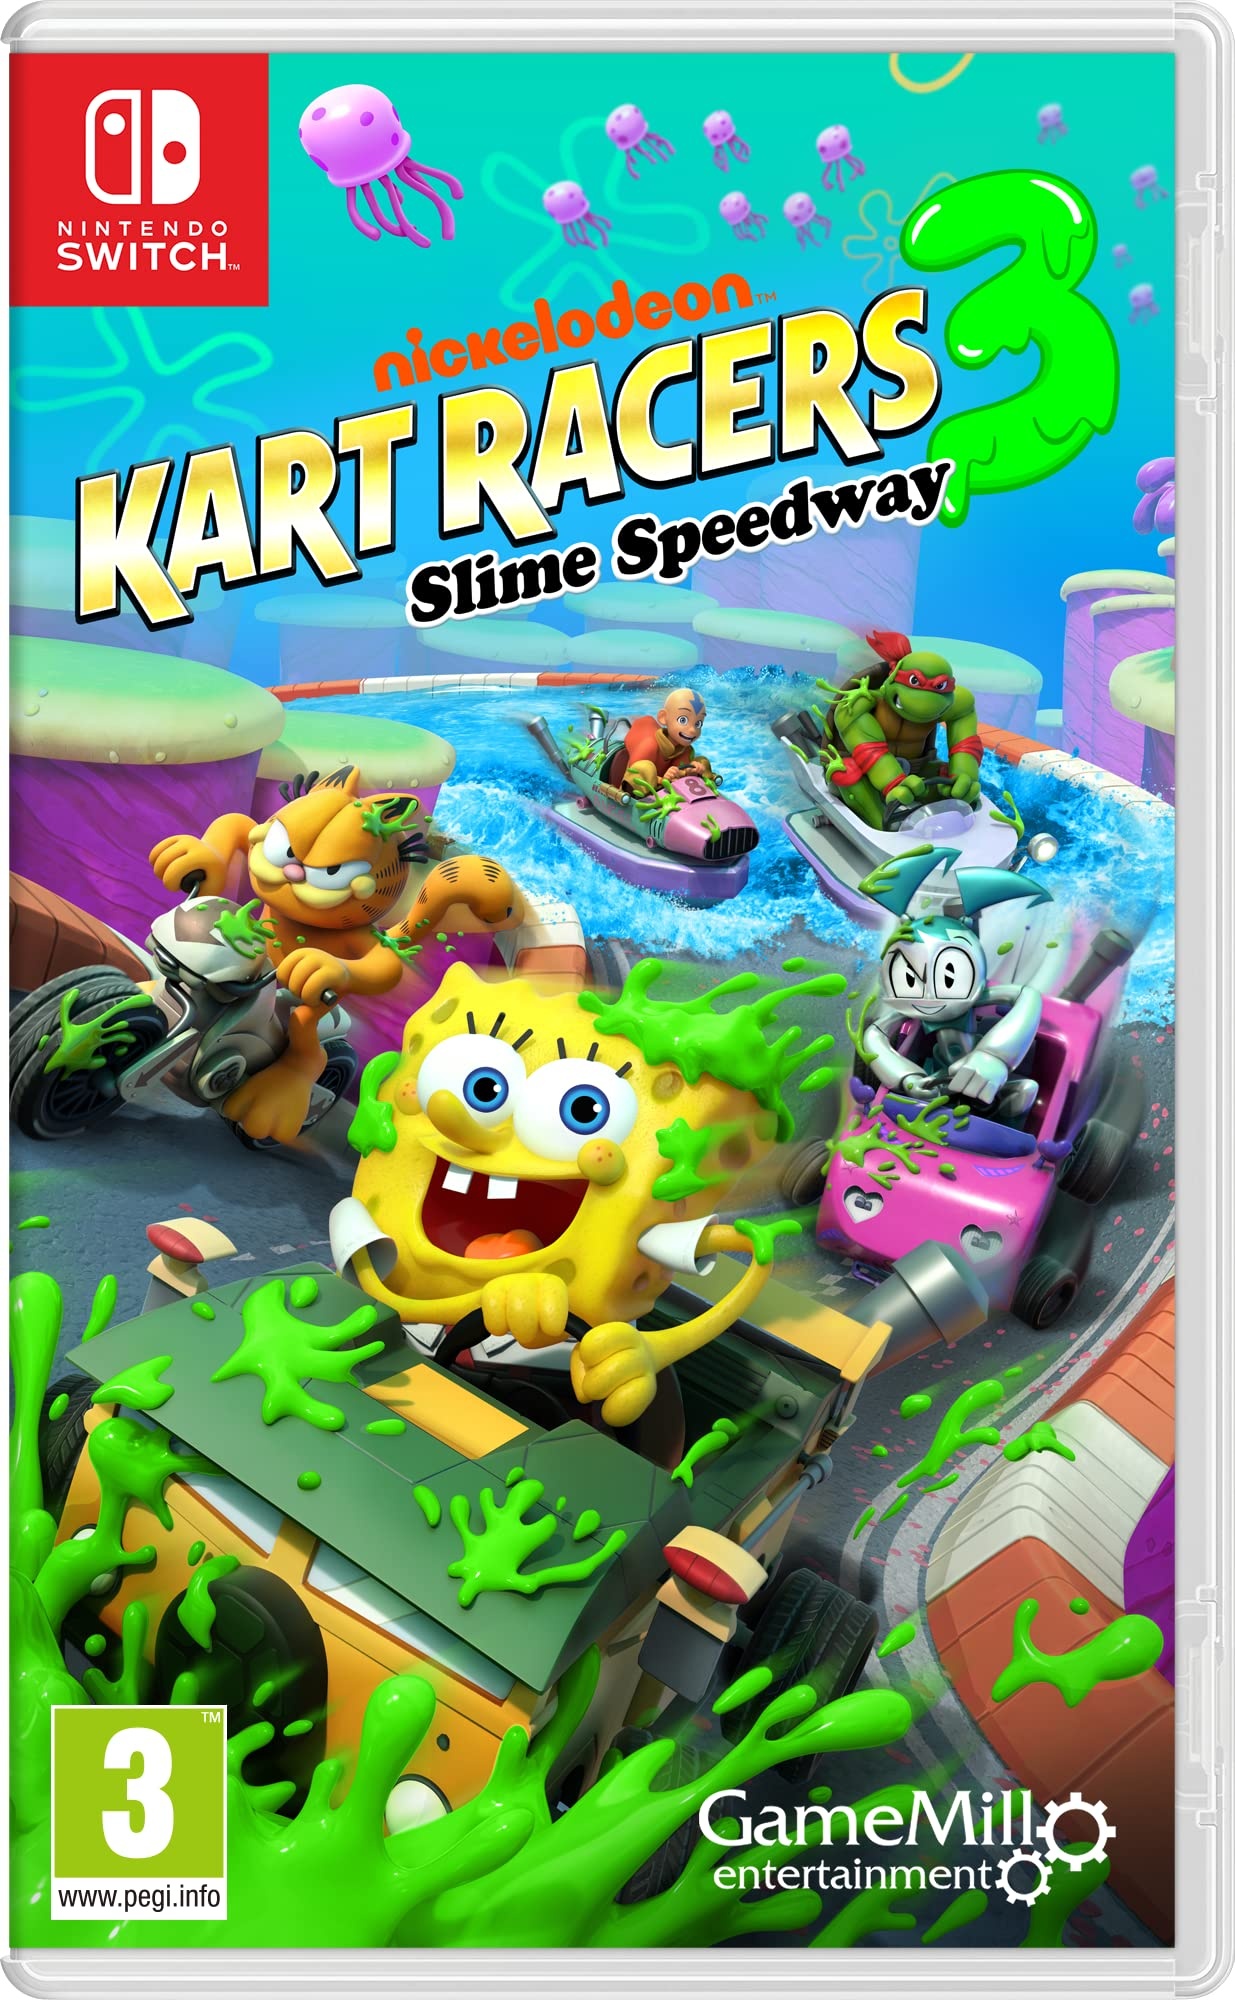 Videogioco GameMill Entertainment Nickelodeon Kart Racers 3 Slime Speedway